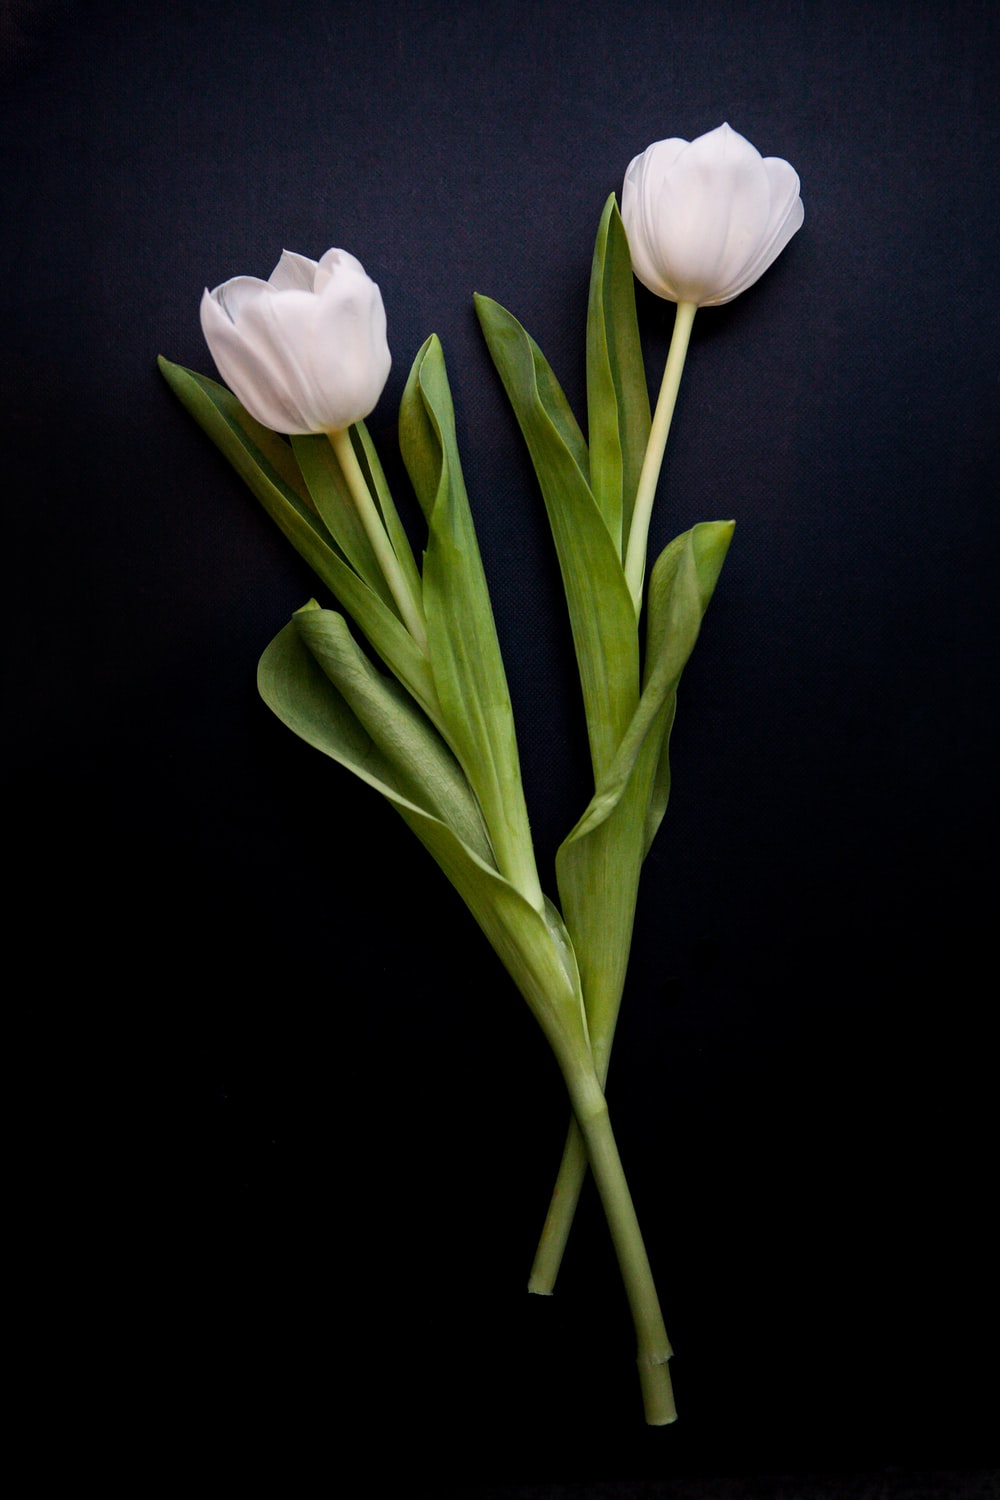 White Tulip Picture. Download Free Image